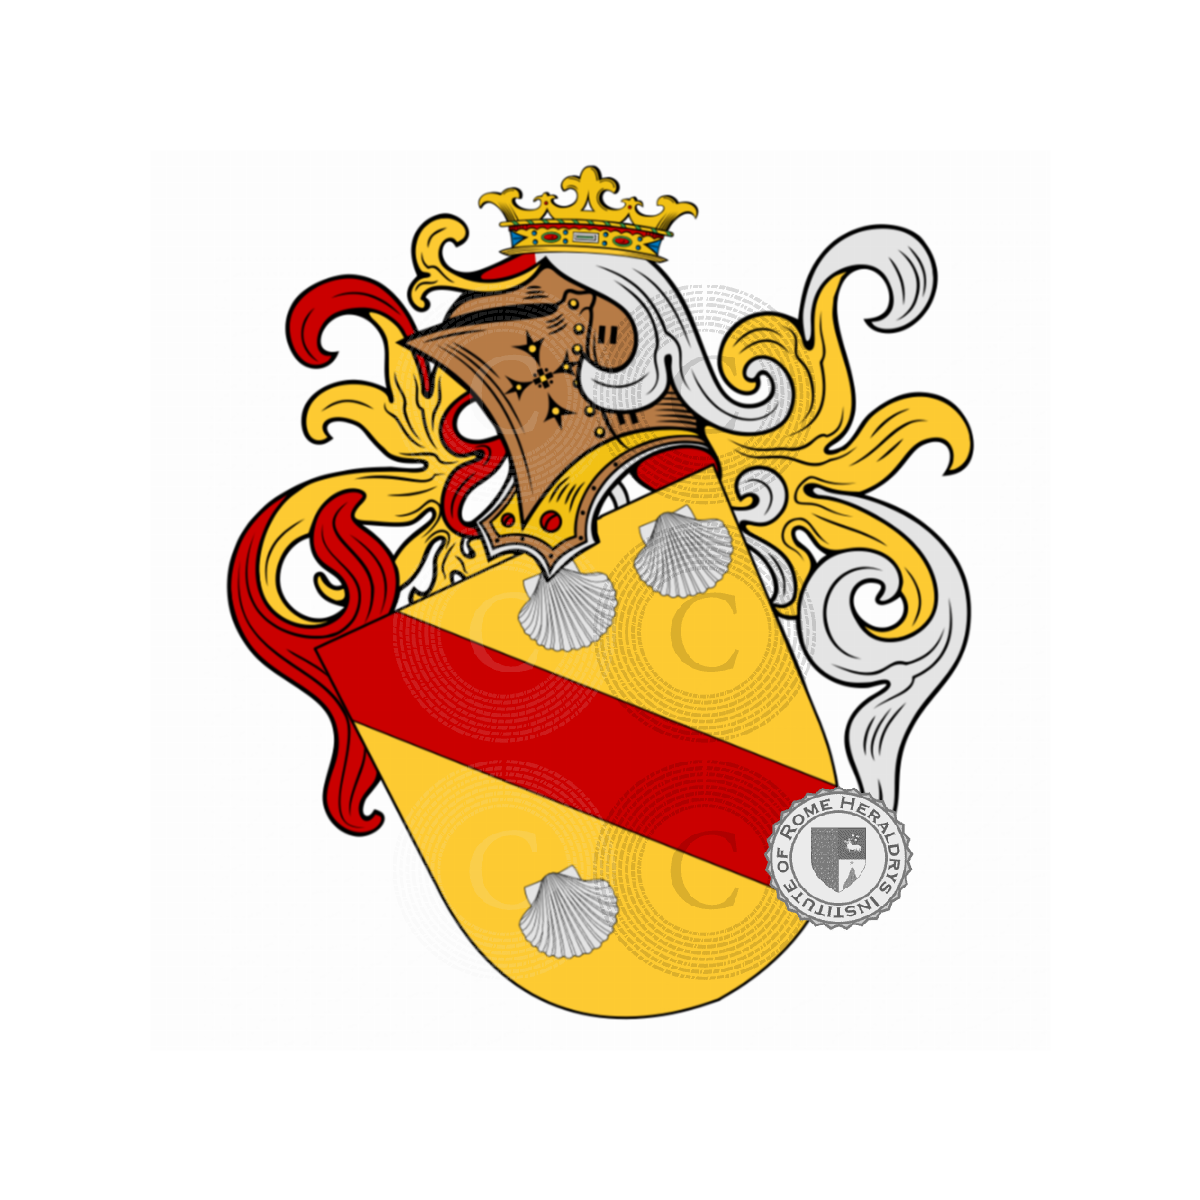 Wappen der FamilieSierck, Siercks